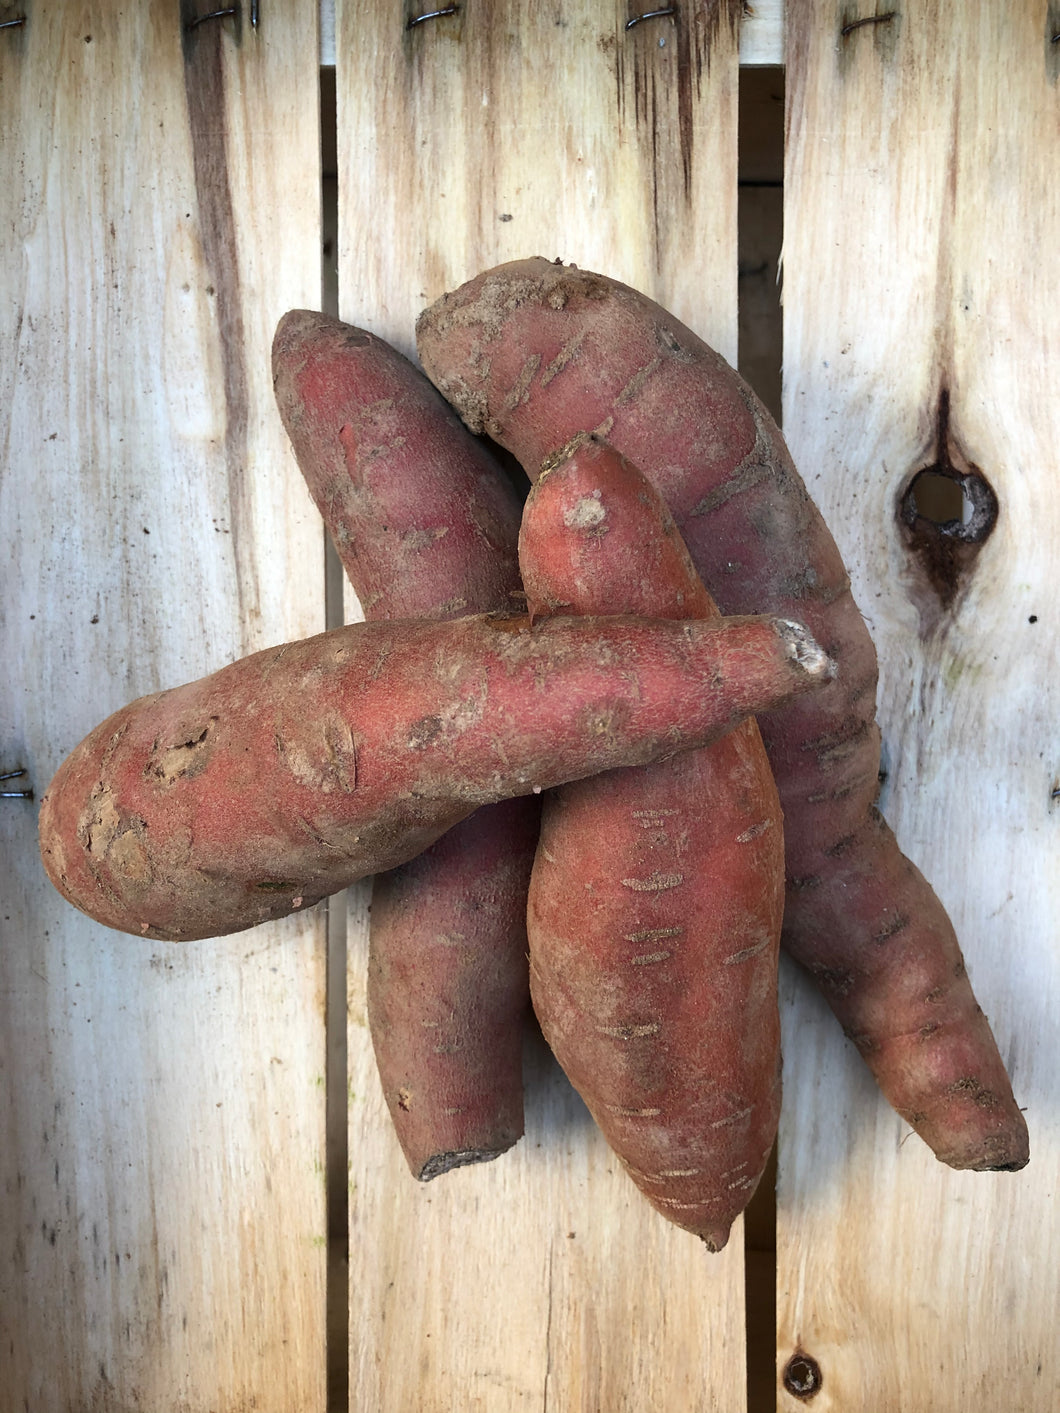 Organic Sweet Potato - €2.99 per 500g